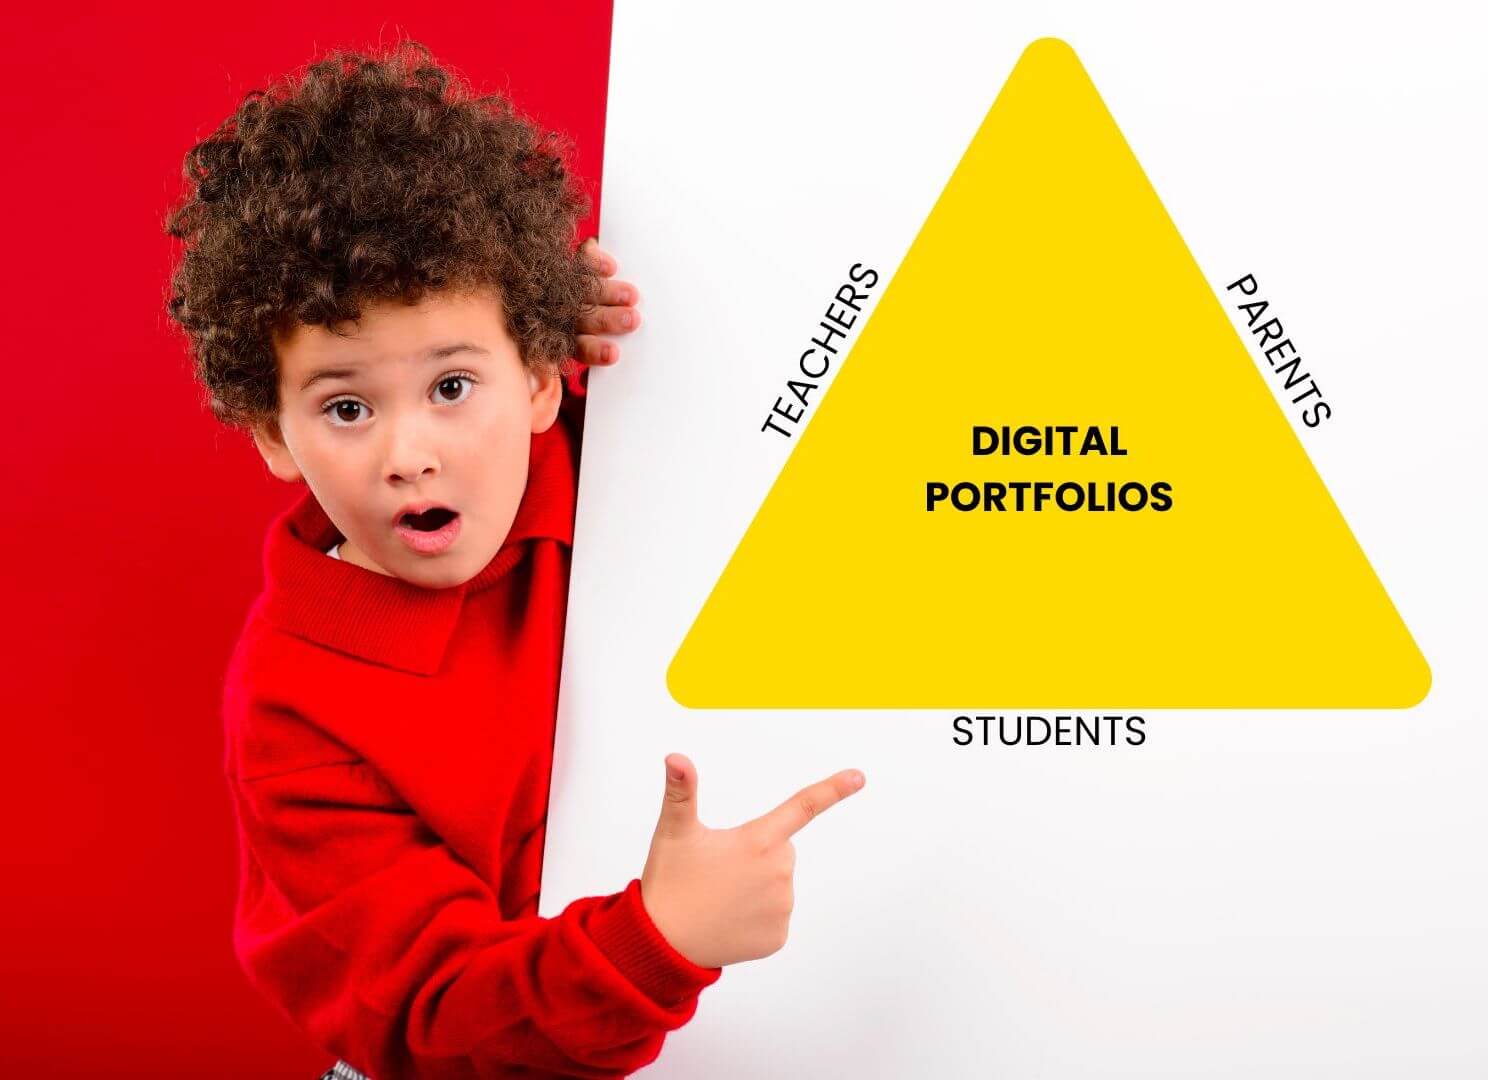 Kid pointing at the Digital Portfolio venn diagram